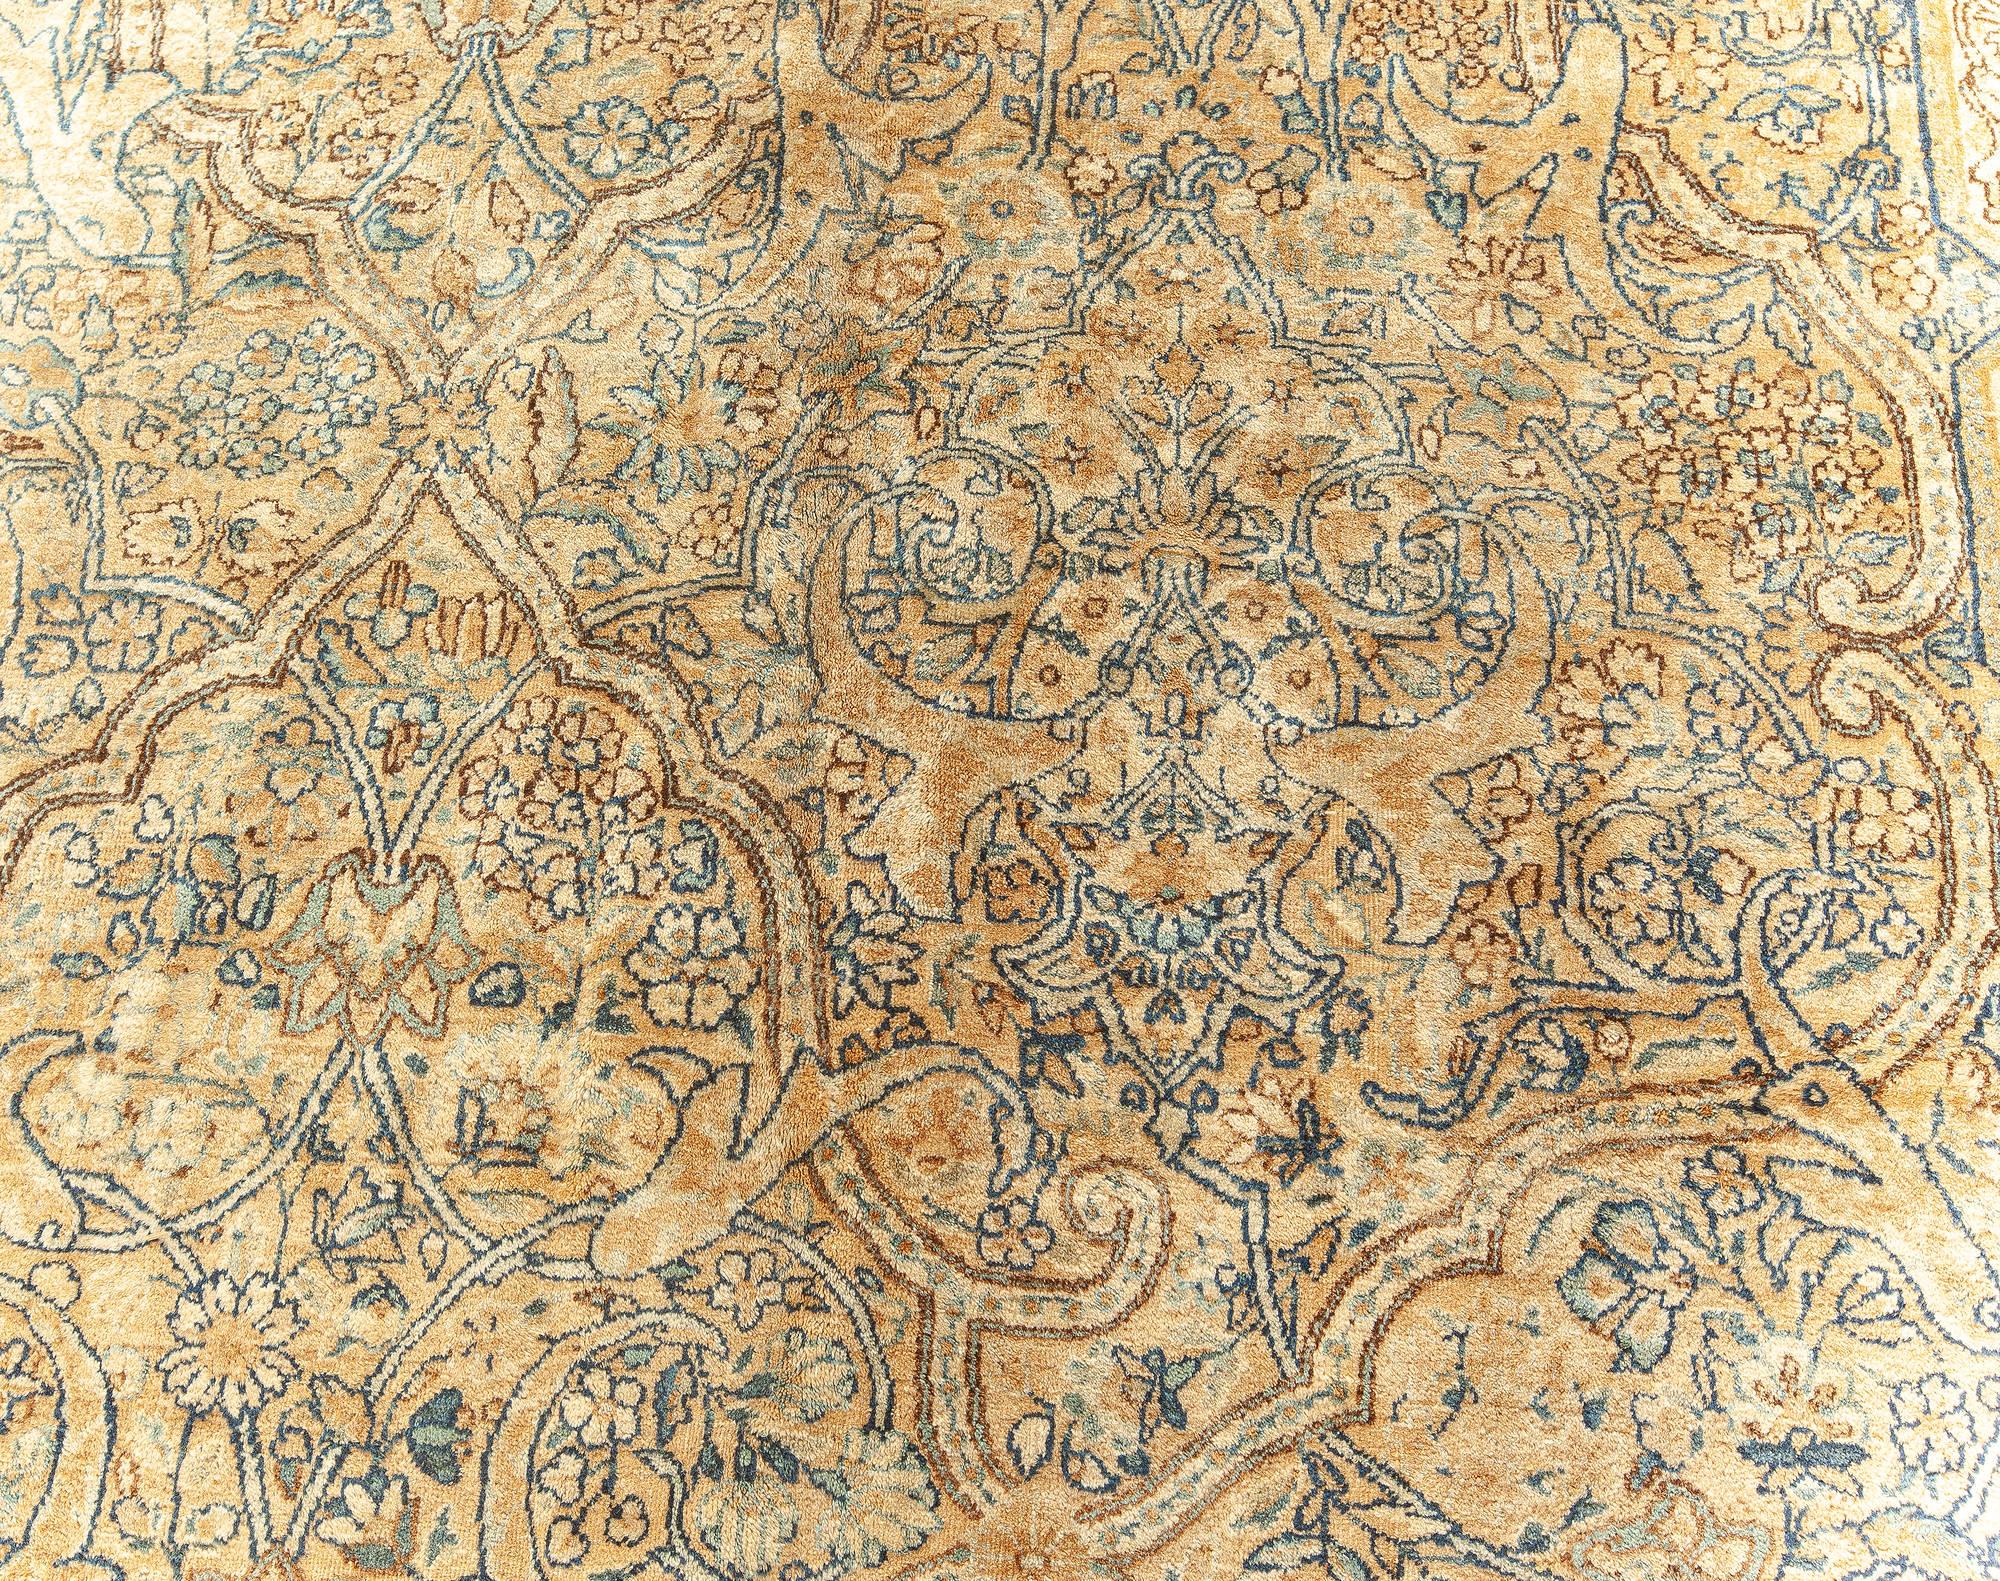 Authentic Persian Kirman handmade wool rug
Size: 10'6